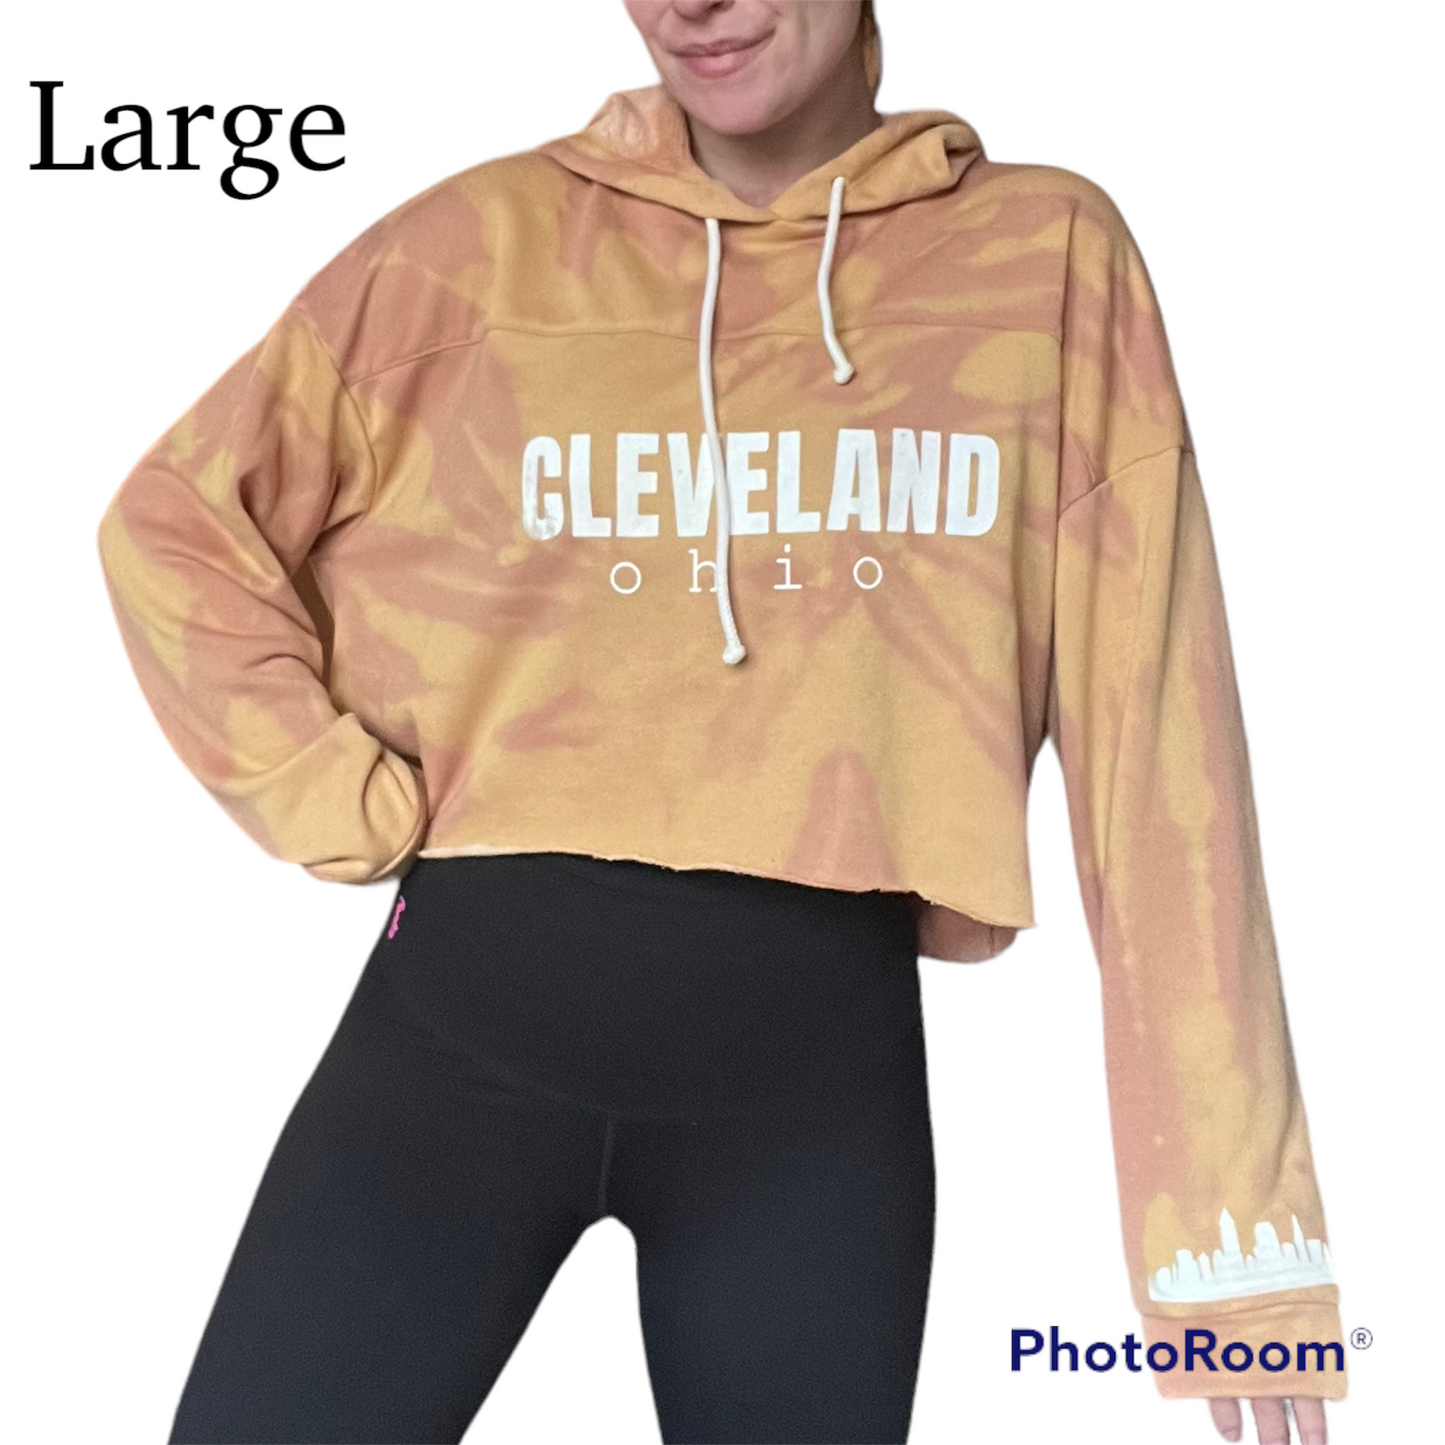 Cleveland skyline hoodie